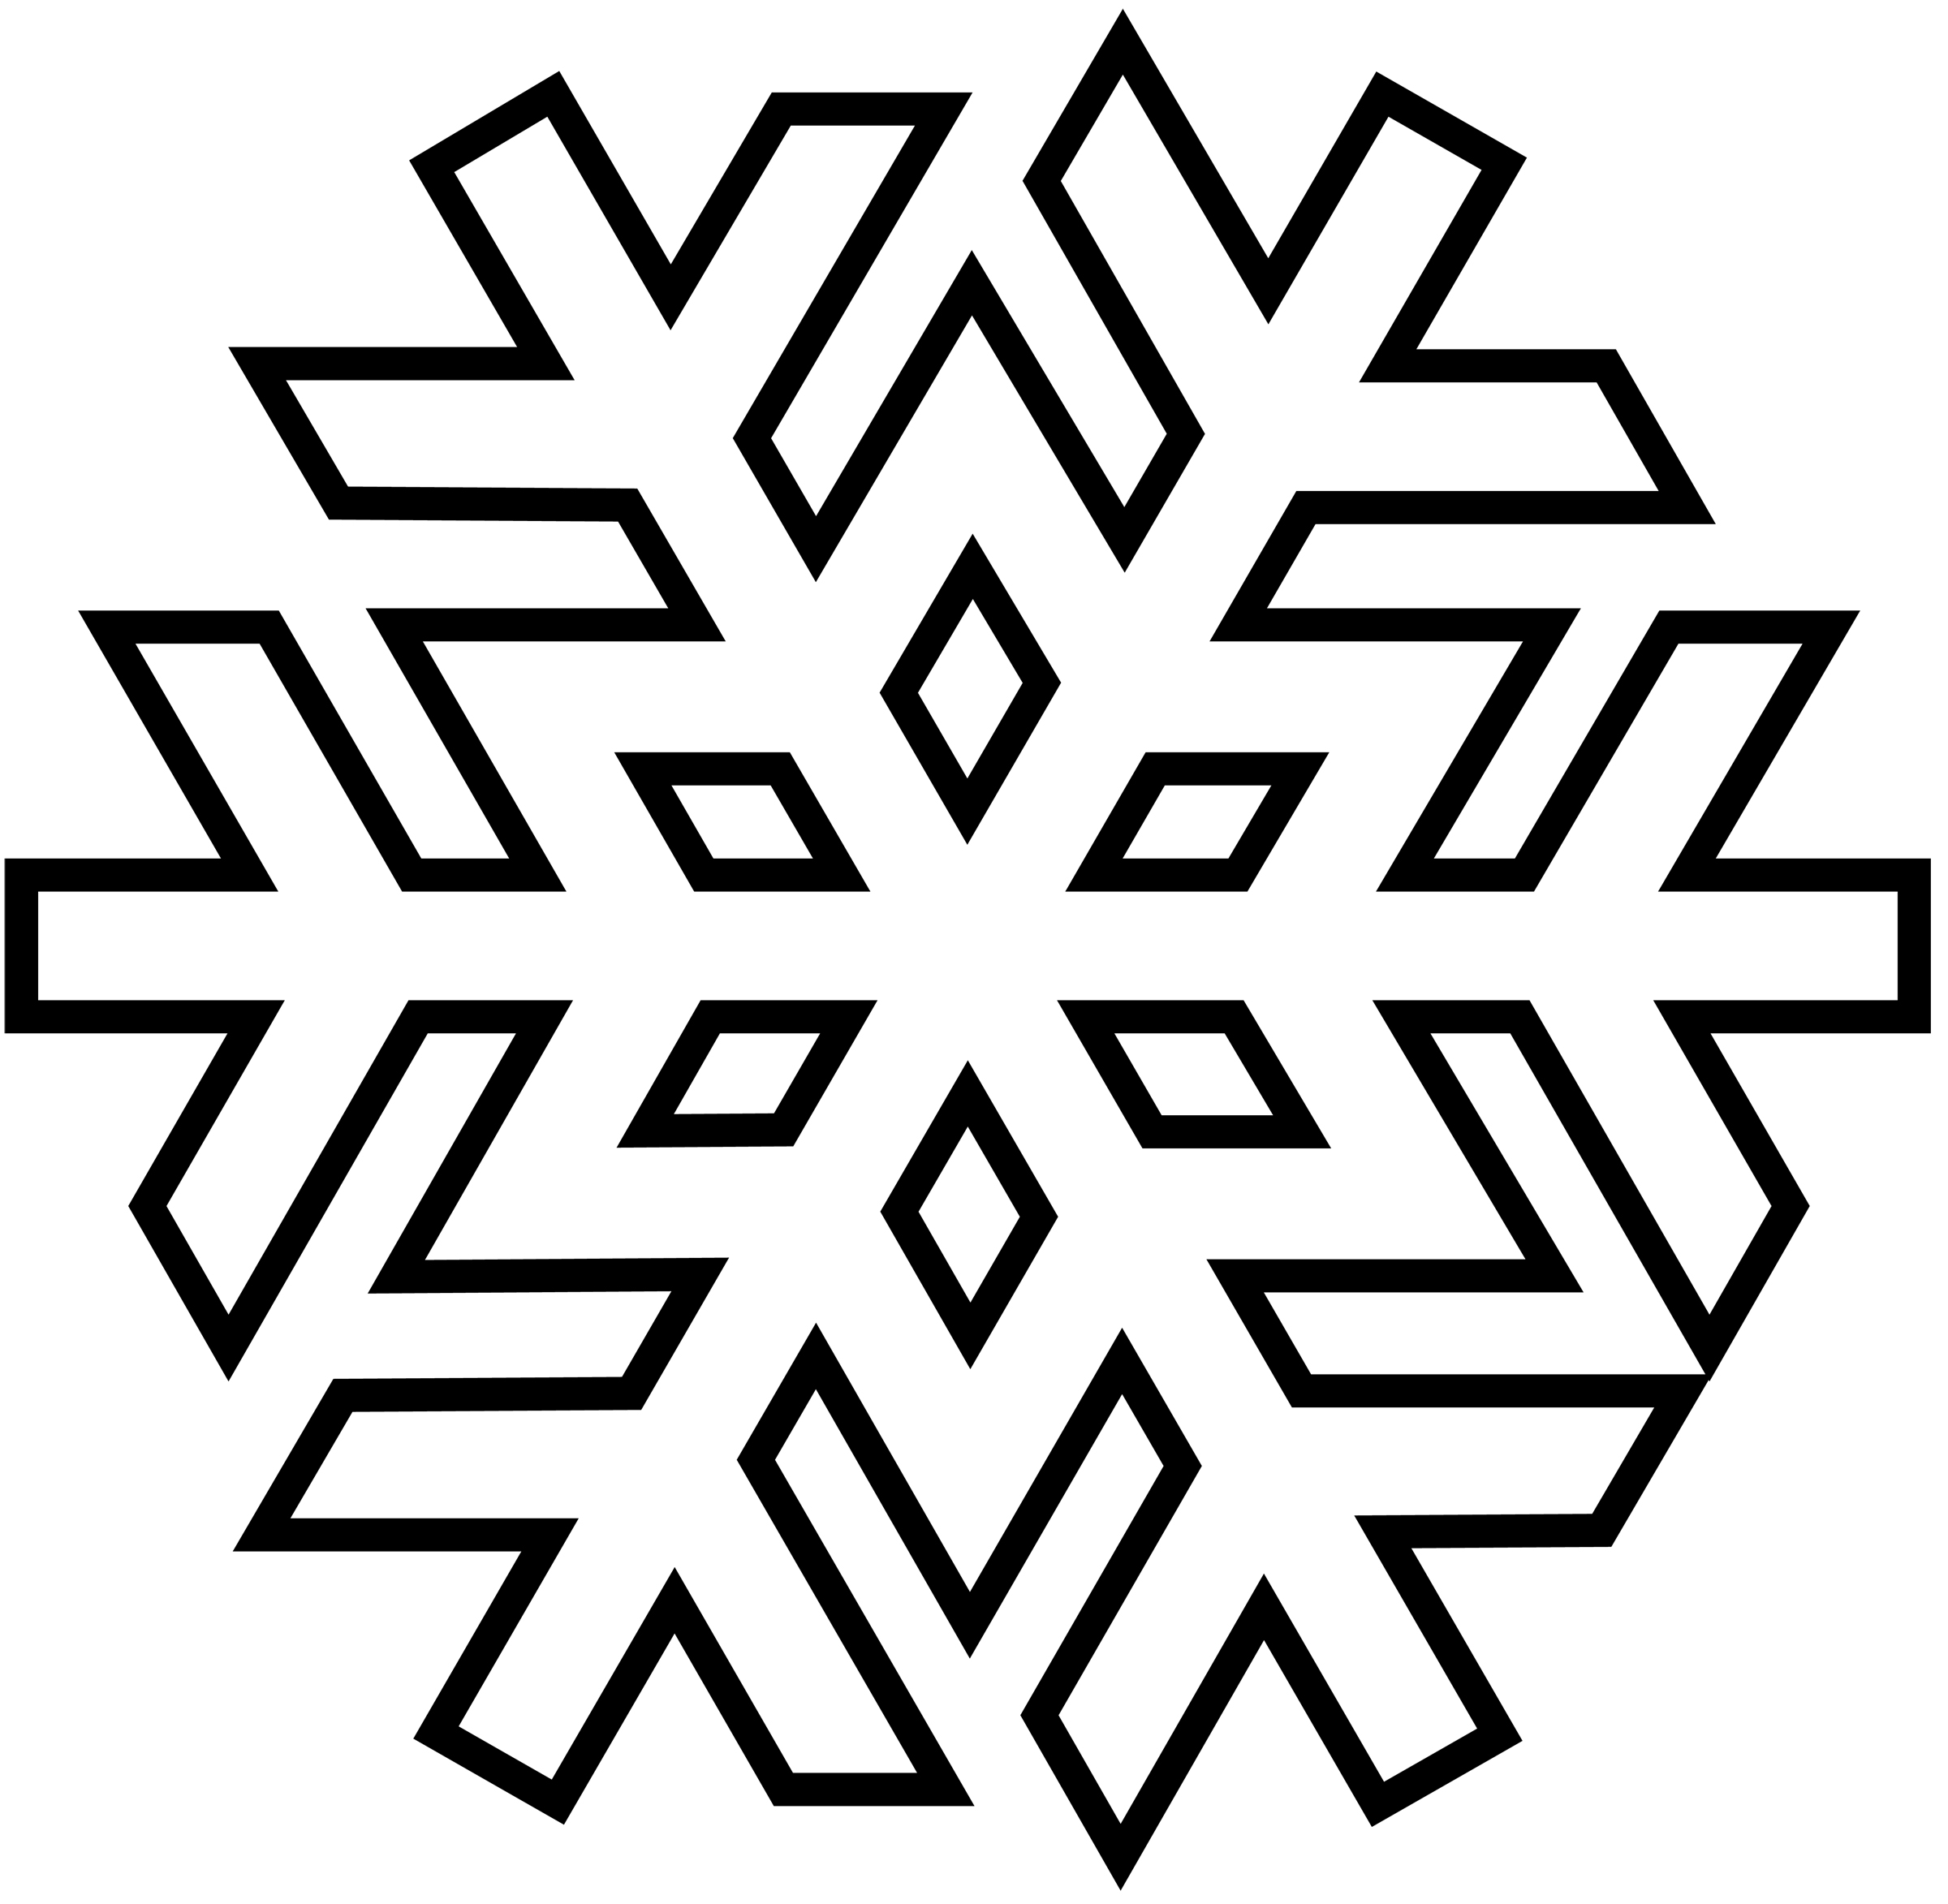 Free Snowflake Drawing, Download Free Snowflake Drawing png images